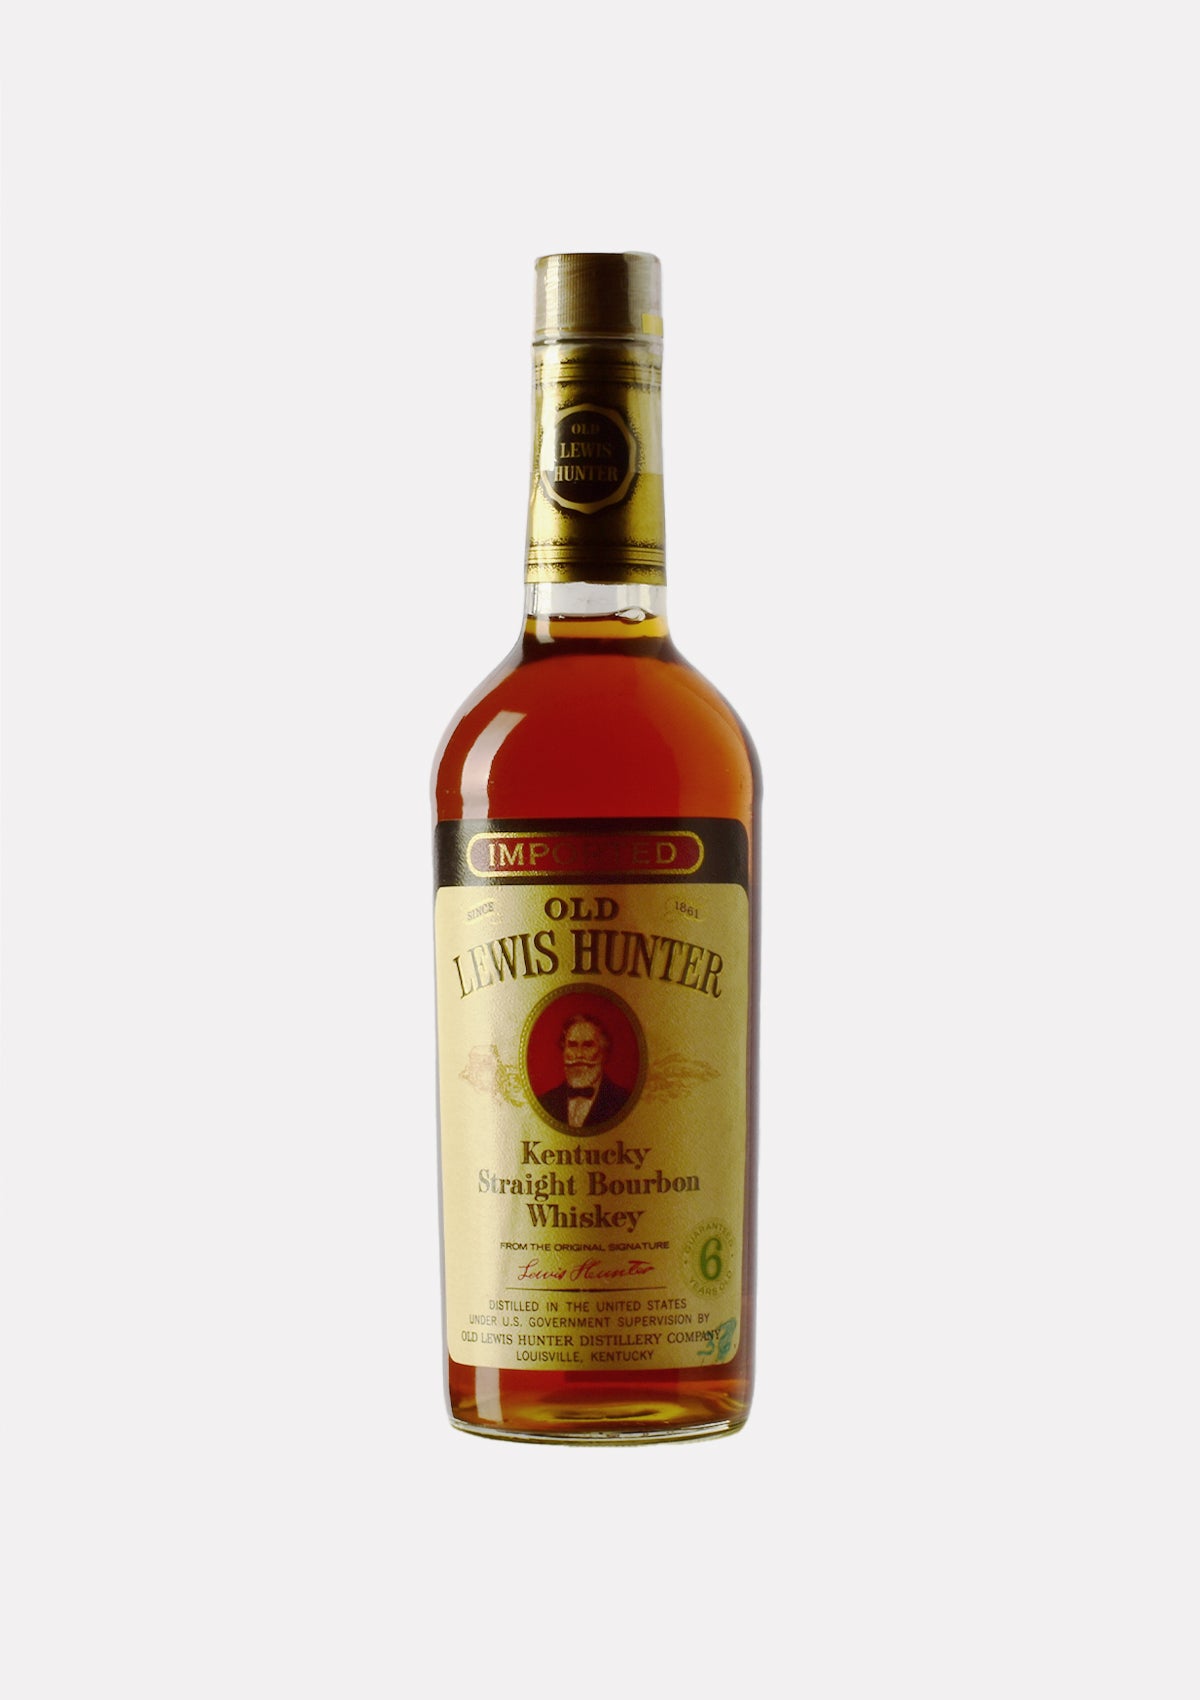 Old Lewis Hunter Kentucky Straight Bourbon Whiskey 6 Jahre